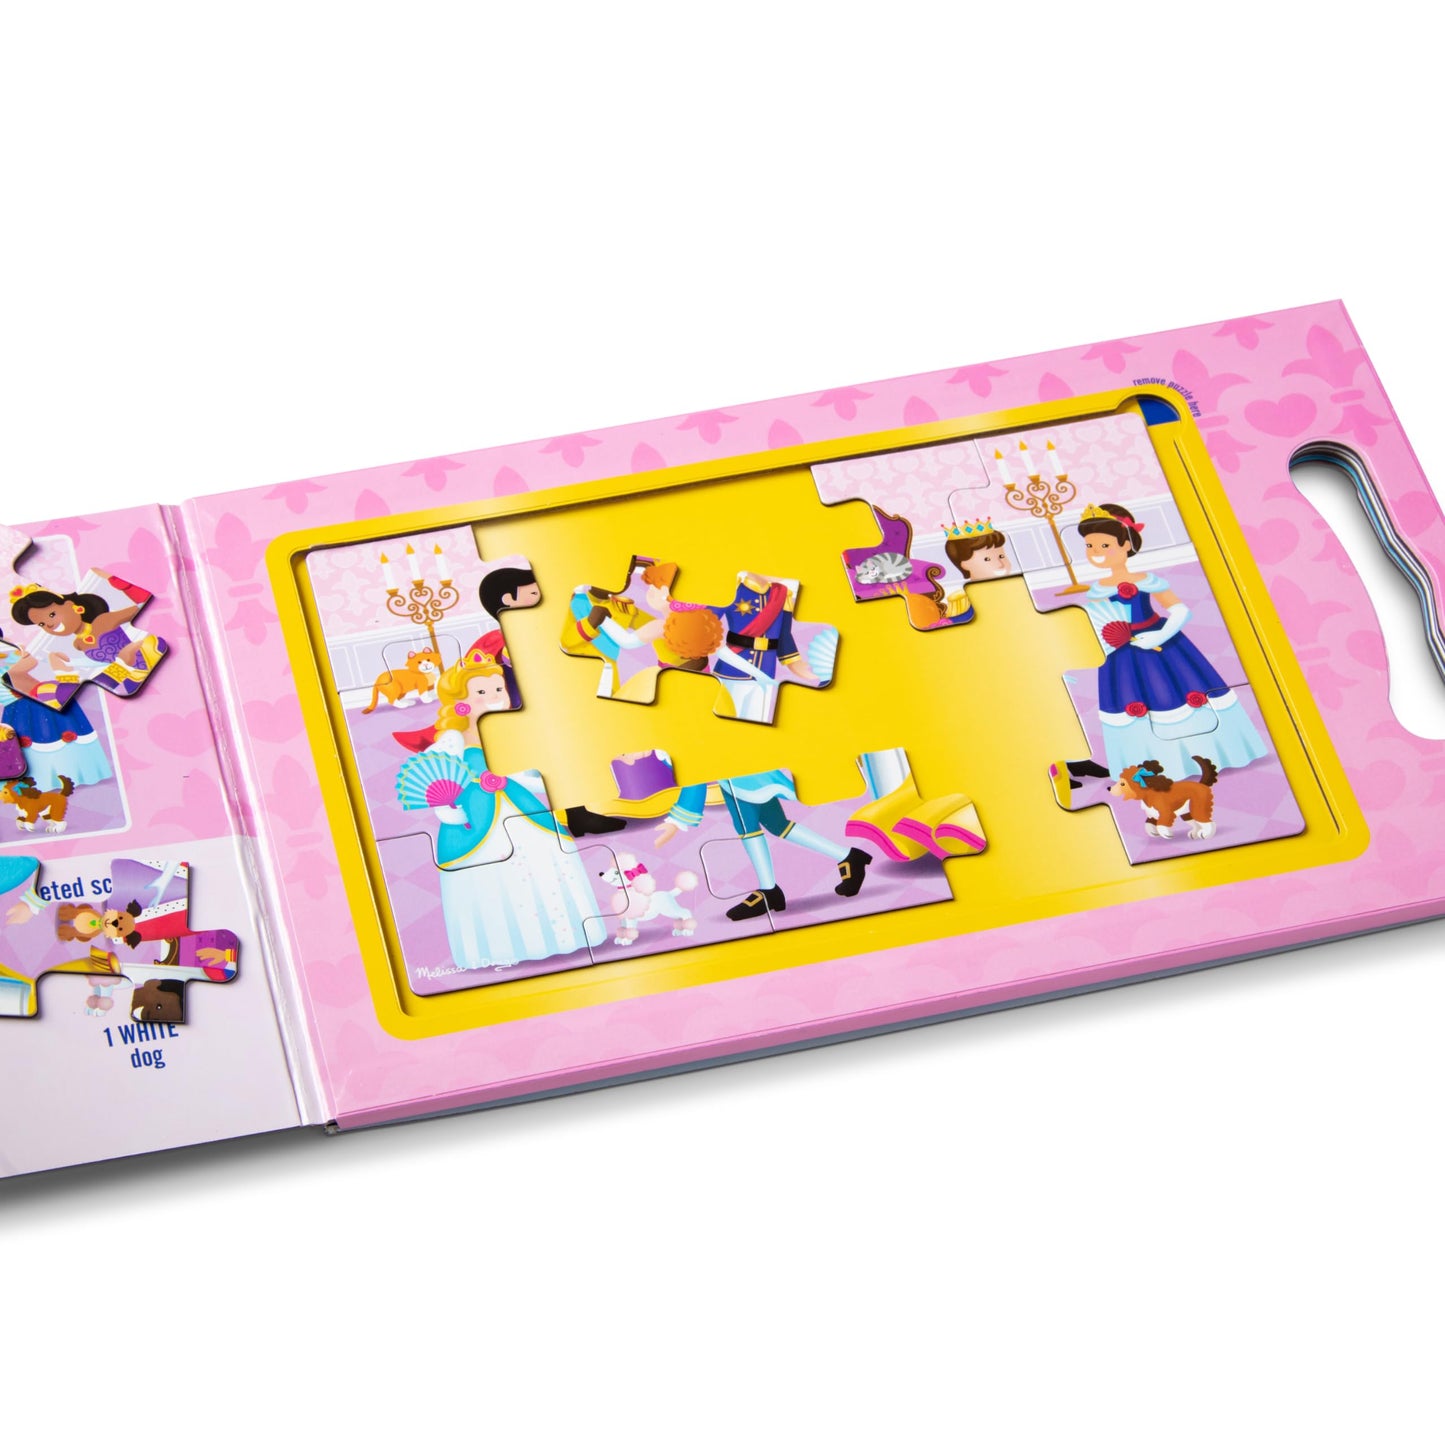 Melissa & Doug Take-Along Magnetic Jigsaw Puzzles Travel Toy Princesses, 1 EA, Pink/violet (2 15-Piece Puzzles)